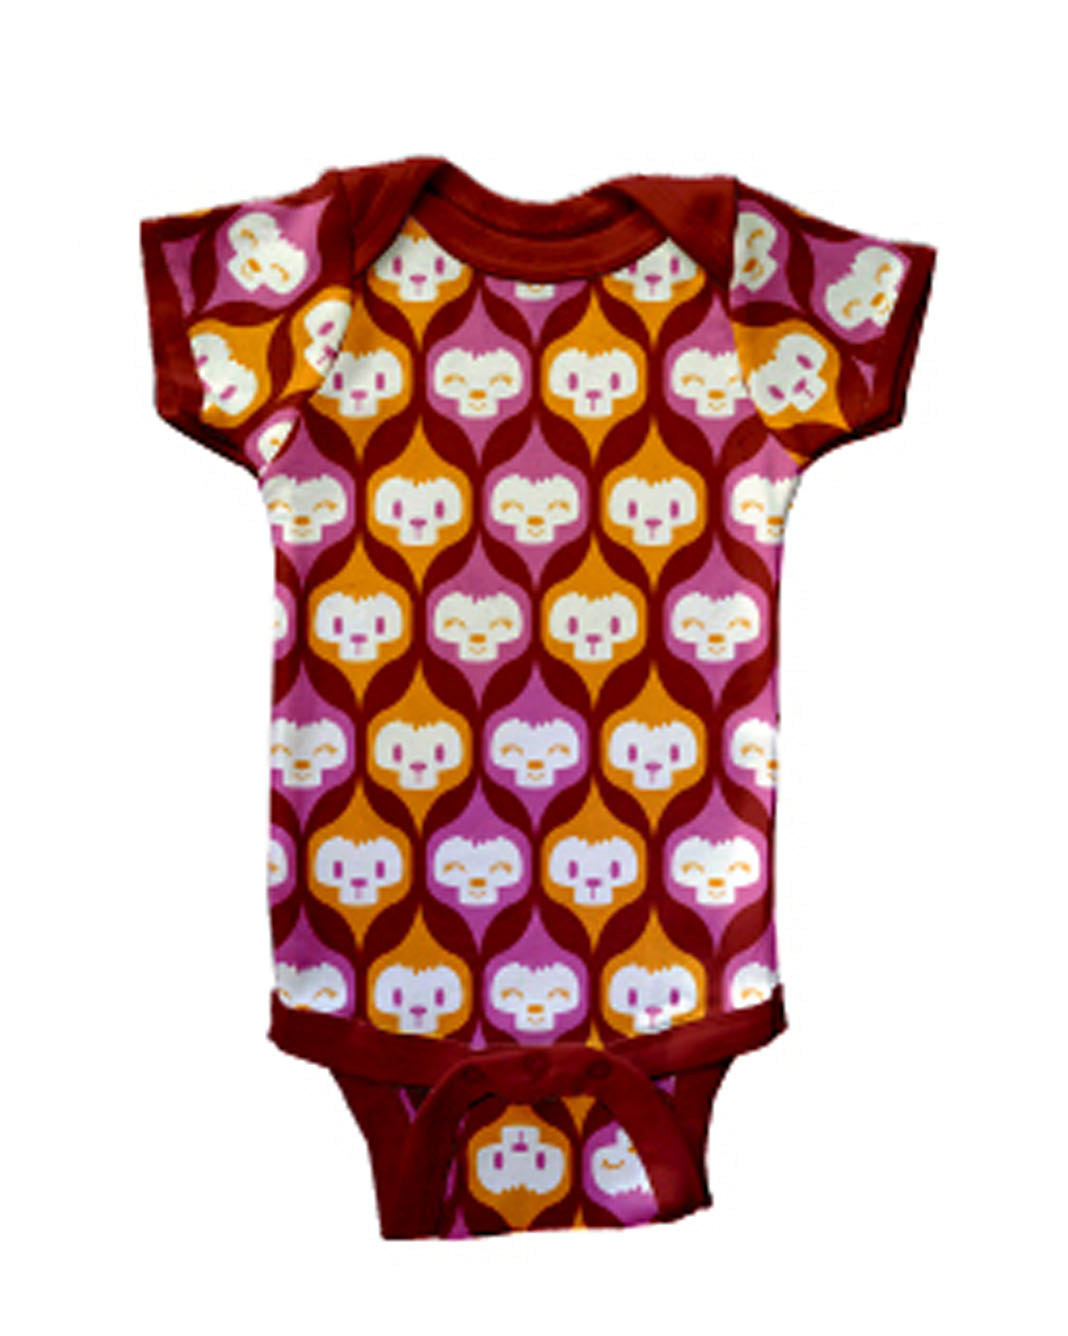 okiiyo baby clothing apparel product development clooci creative